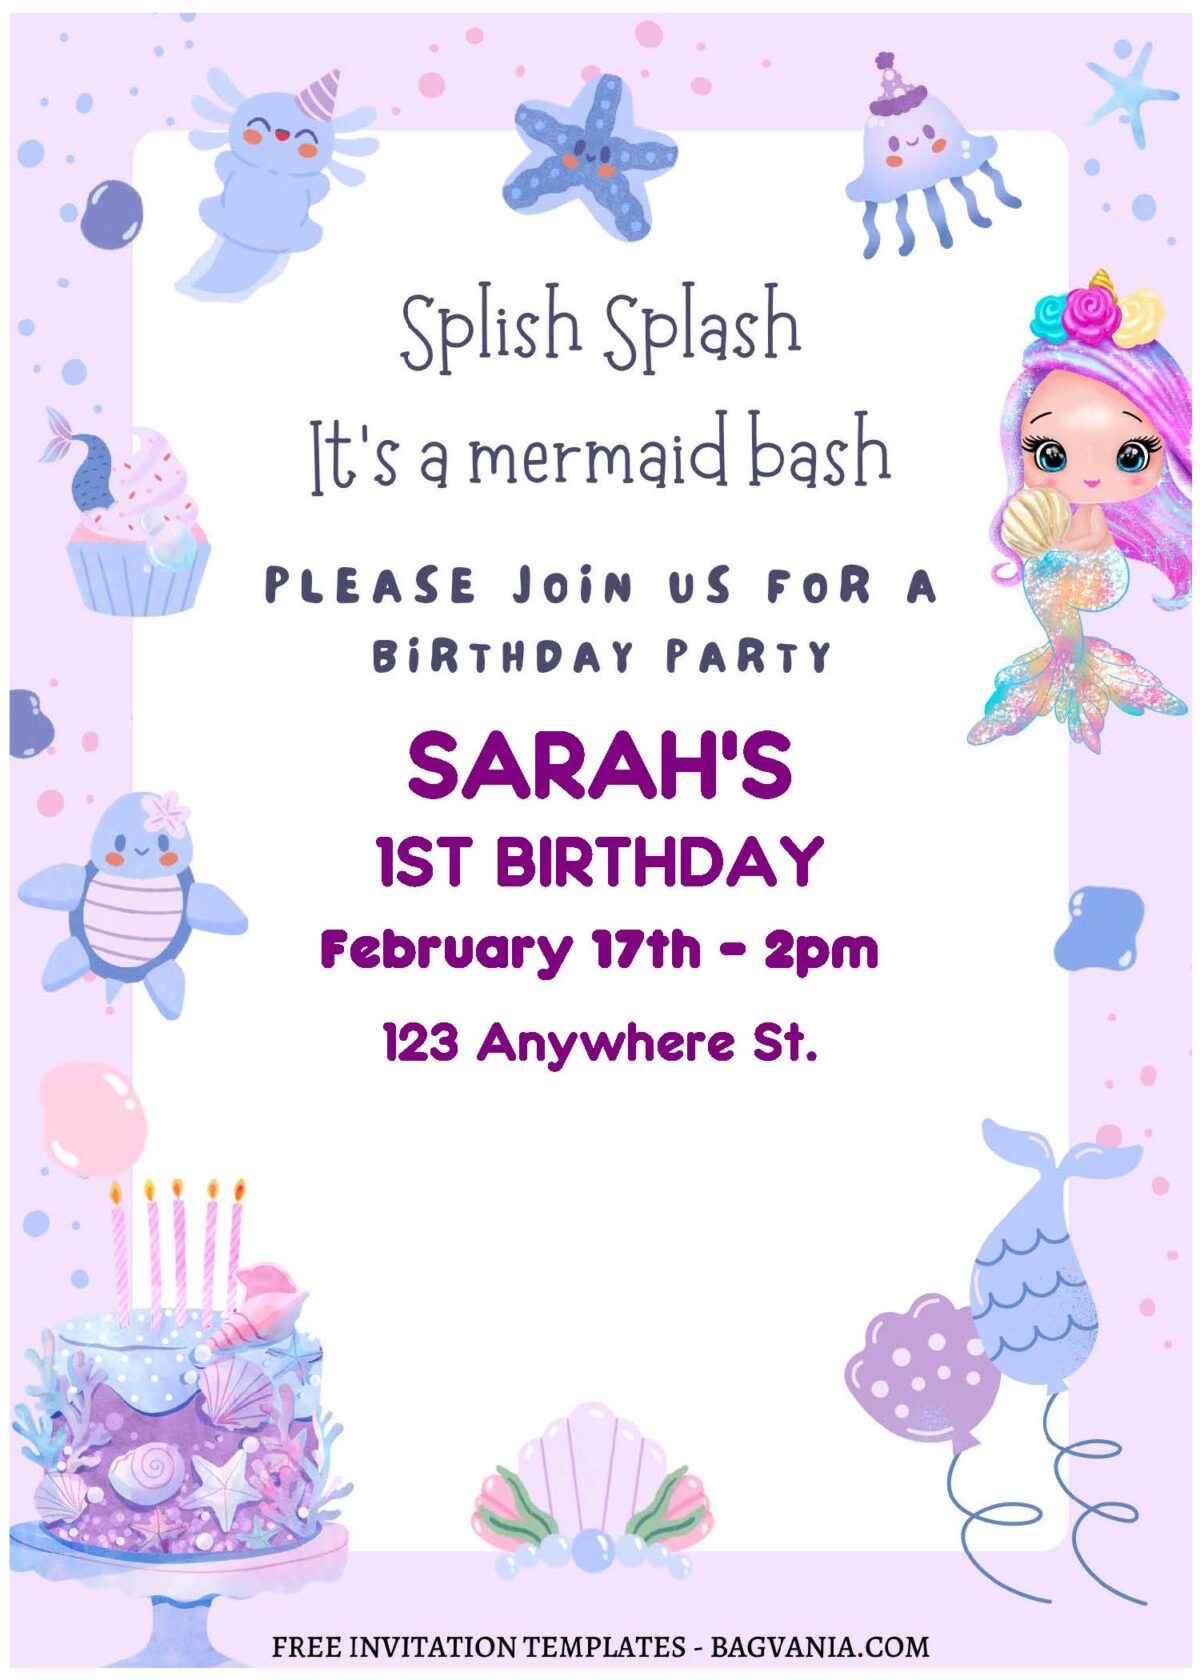 (Free Editable PDF) Pearly Cute Mermaid Princess Birthday Invitation Templates A